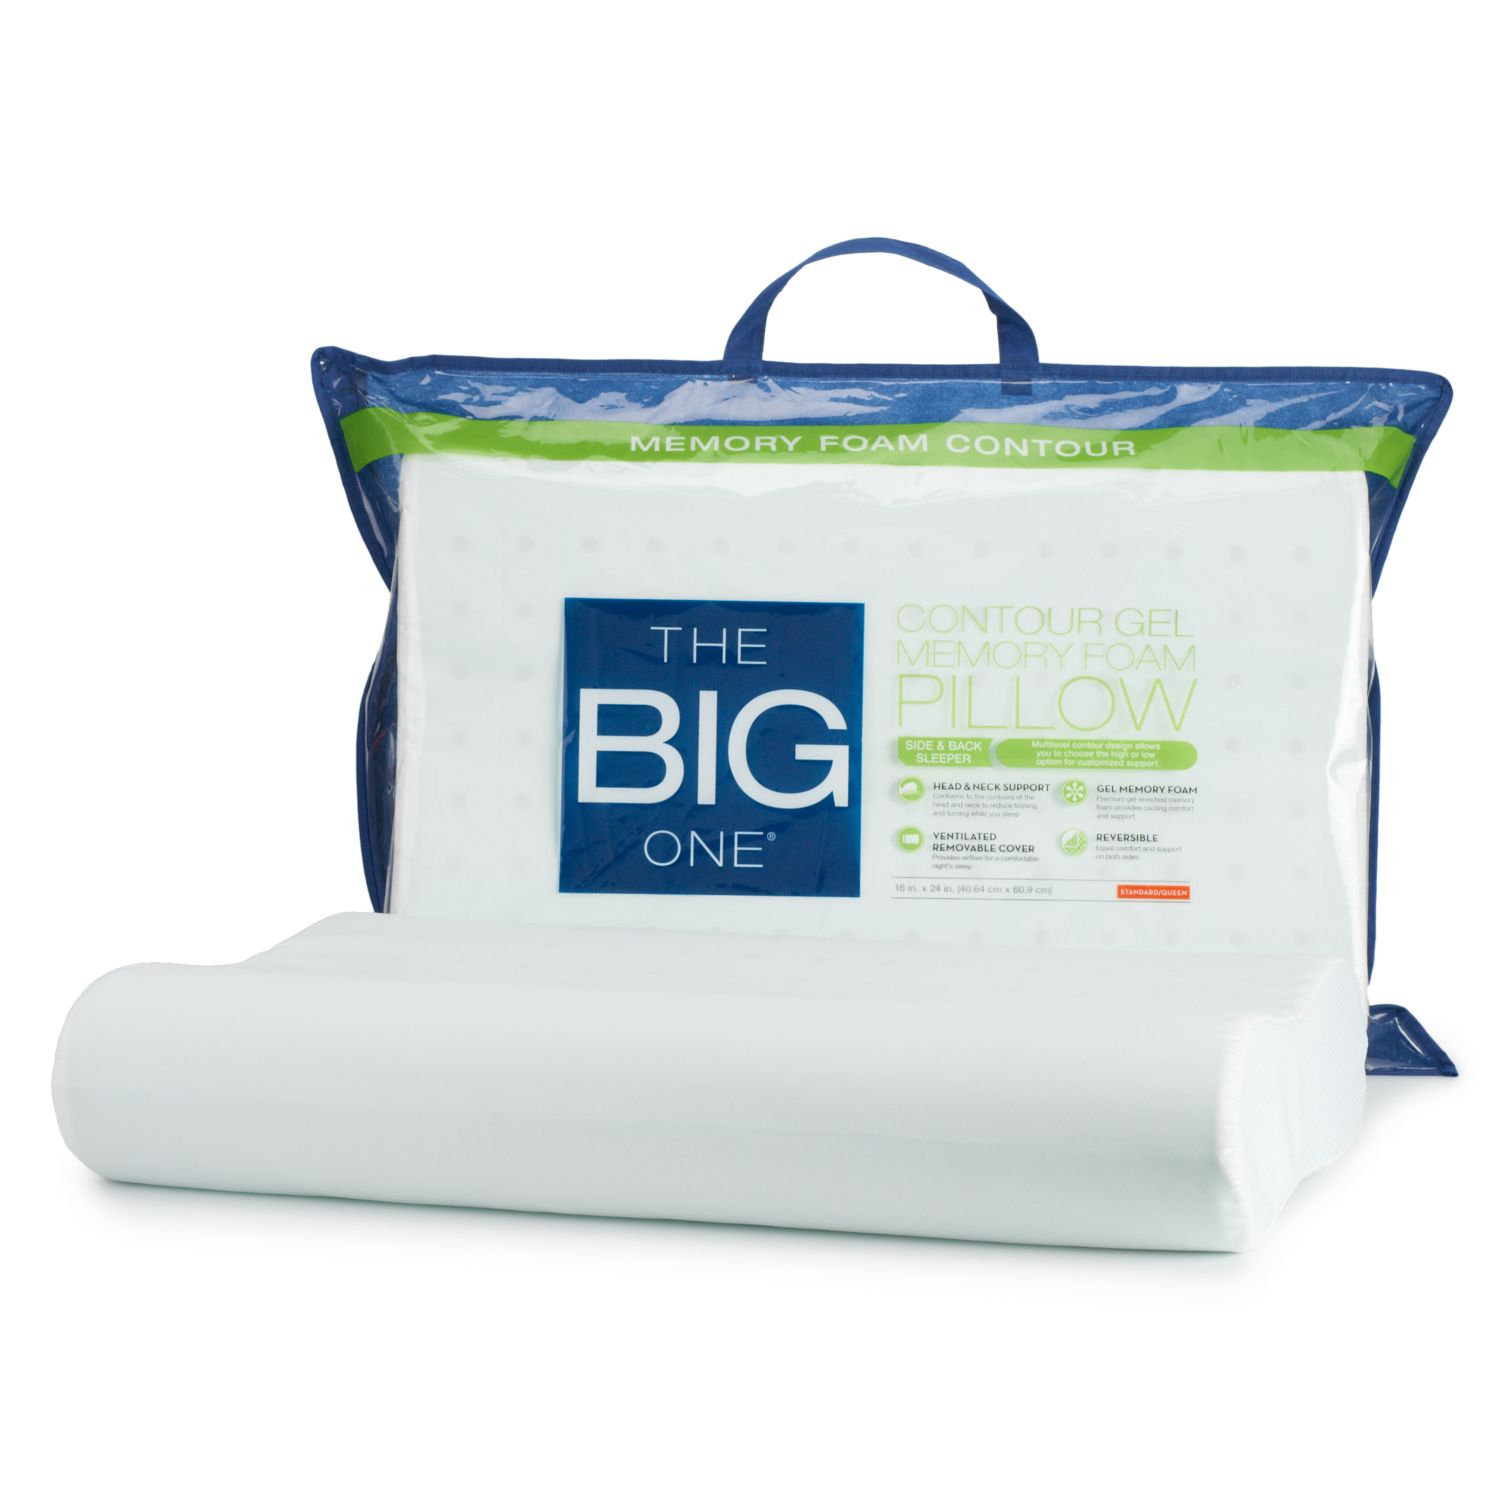 The Big One® Contour Gel Memory Foam Pillow